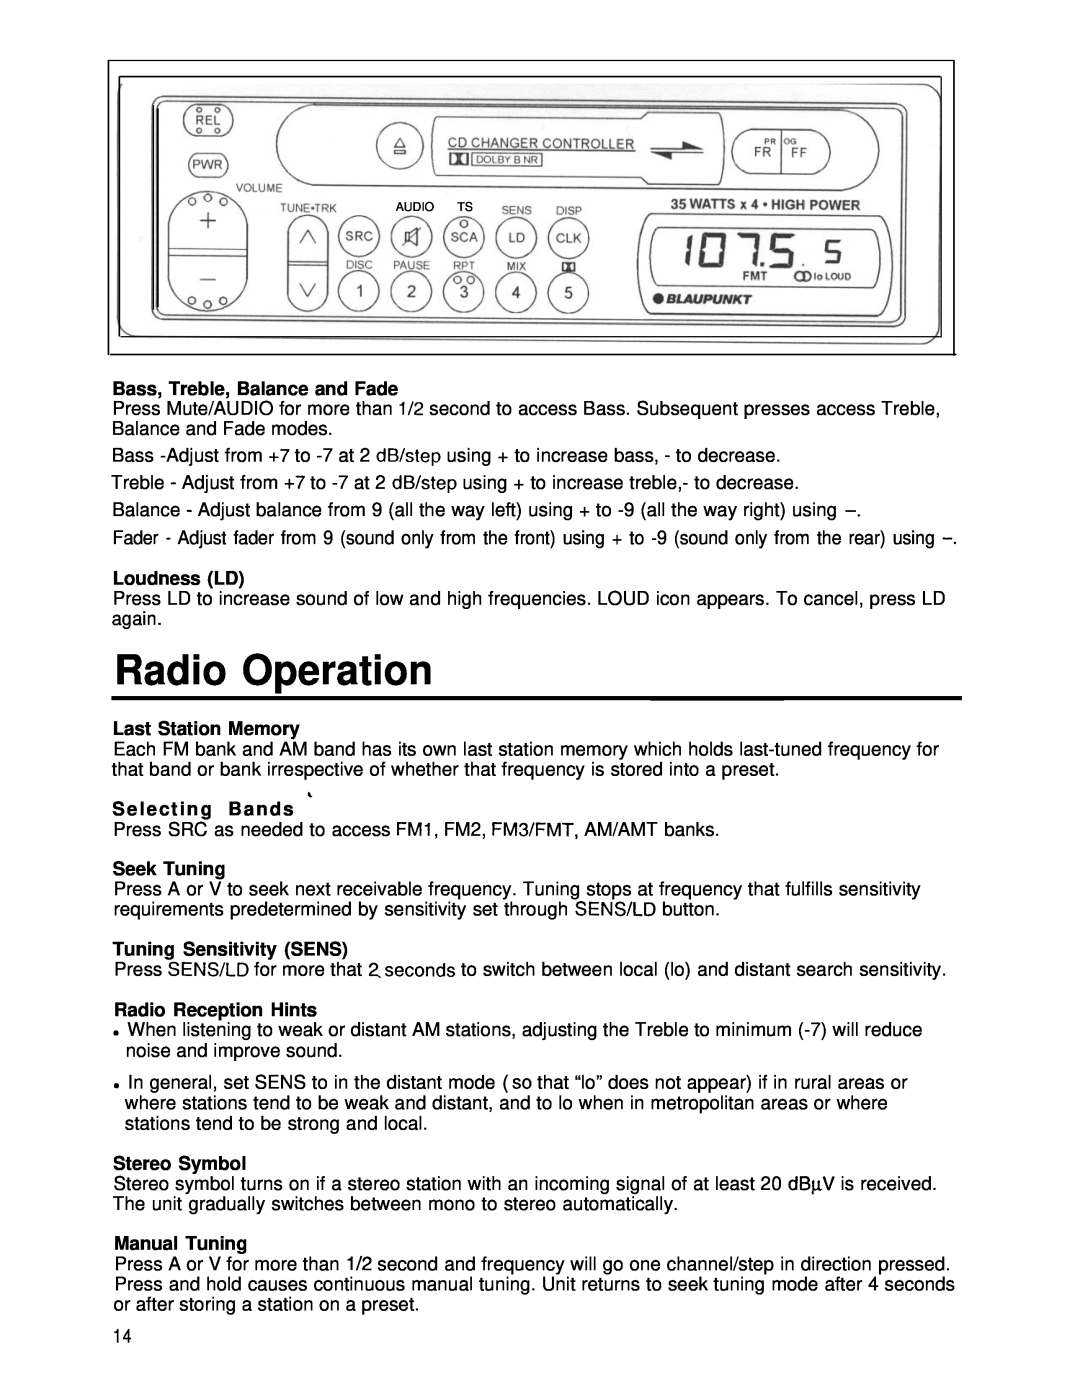 Blaupunkt CR67 manual Radio Operation, Bass, Treble, Balance and Fade, Loudness LD, Last Station Memory, Selecting Bands ’ 